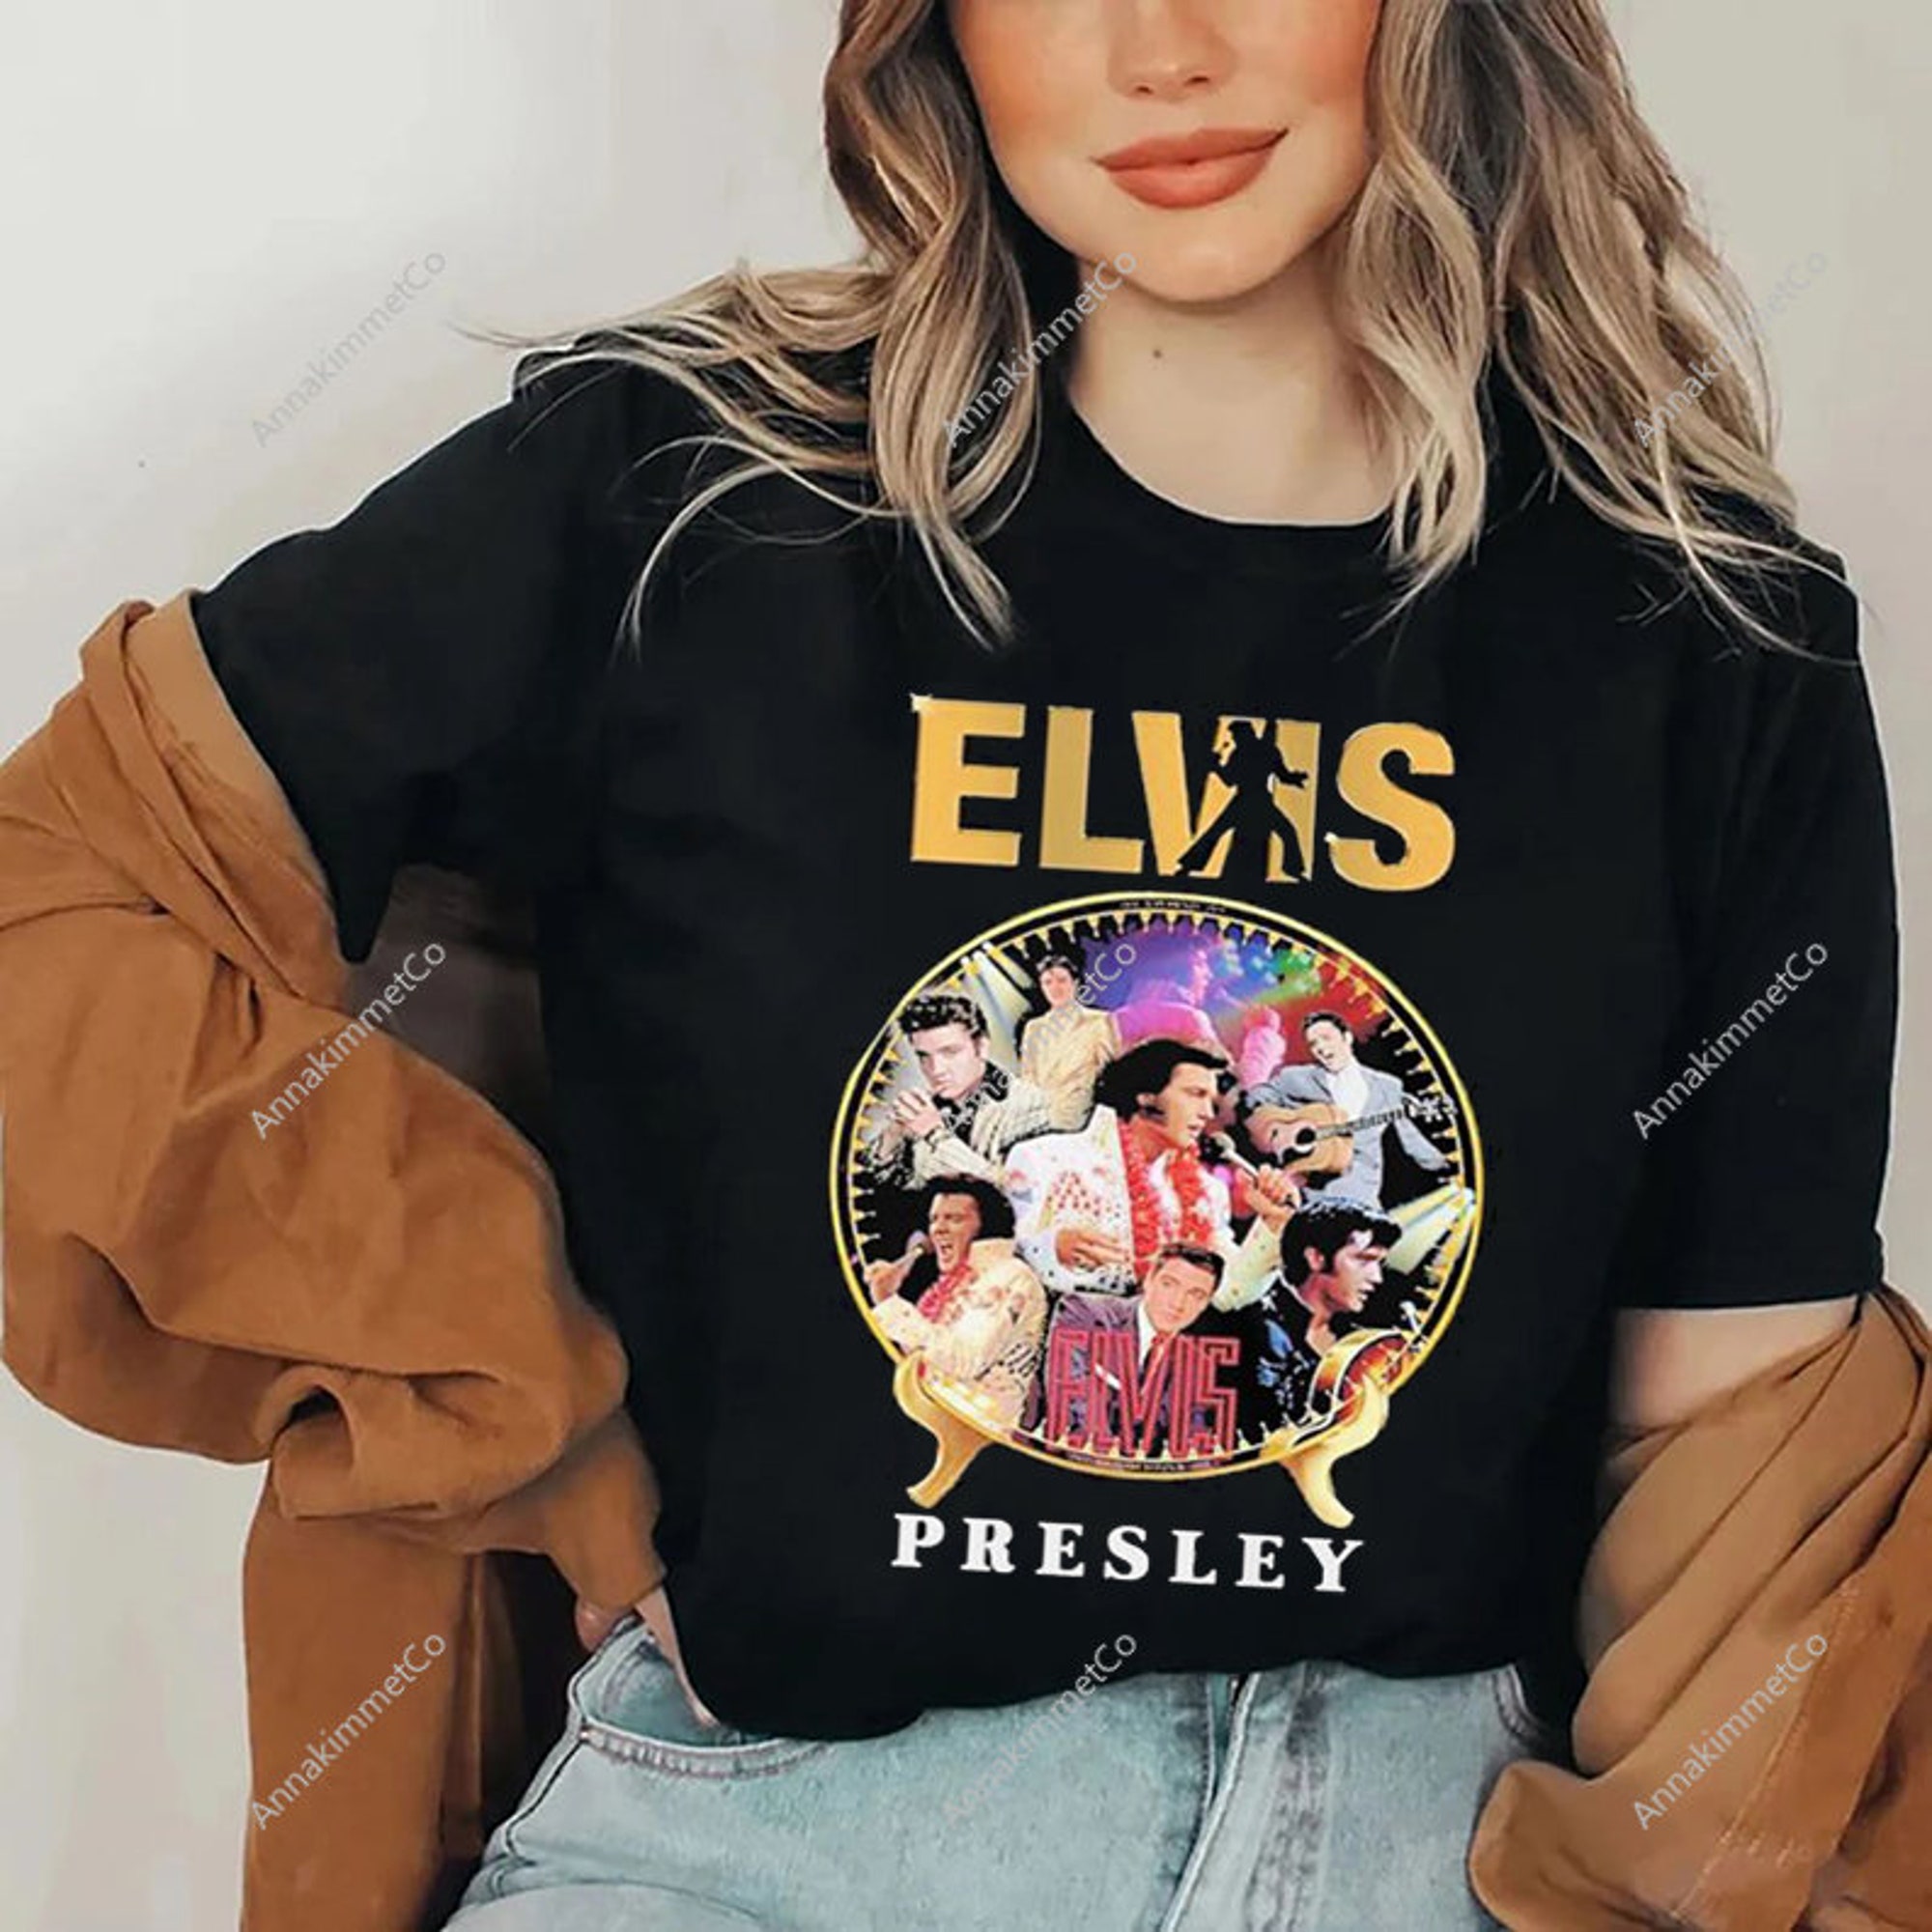 Discover Elvis Presley Shirt, Elvis Presley 2022 Movie for T shirt, ELVIS Shirt, Elvis Tom Hanks-Austin Butler Movie 2022